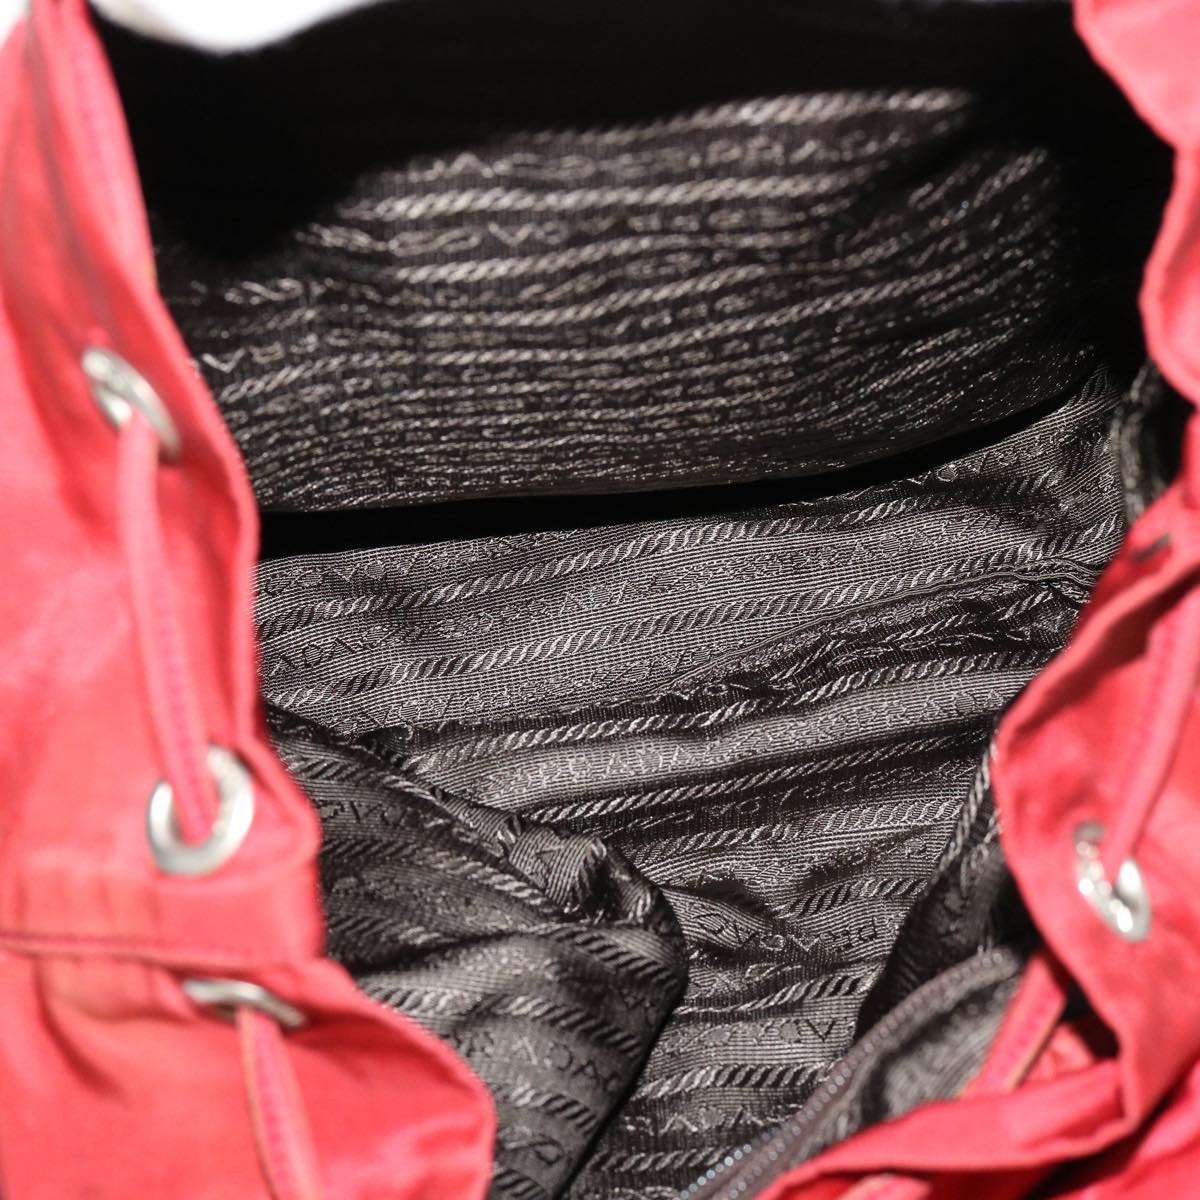 PRADA Backpack Nylon Red Auth 69653